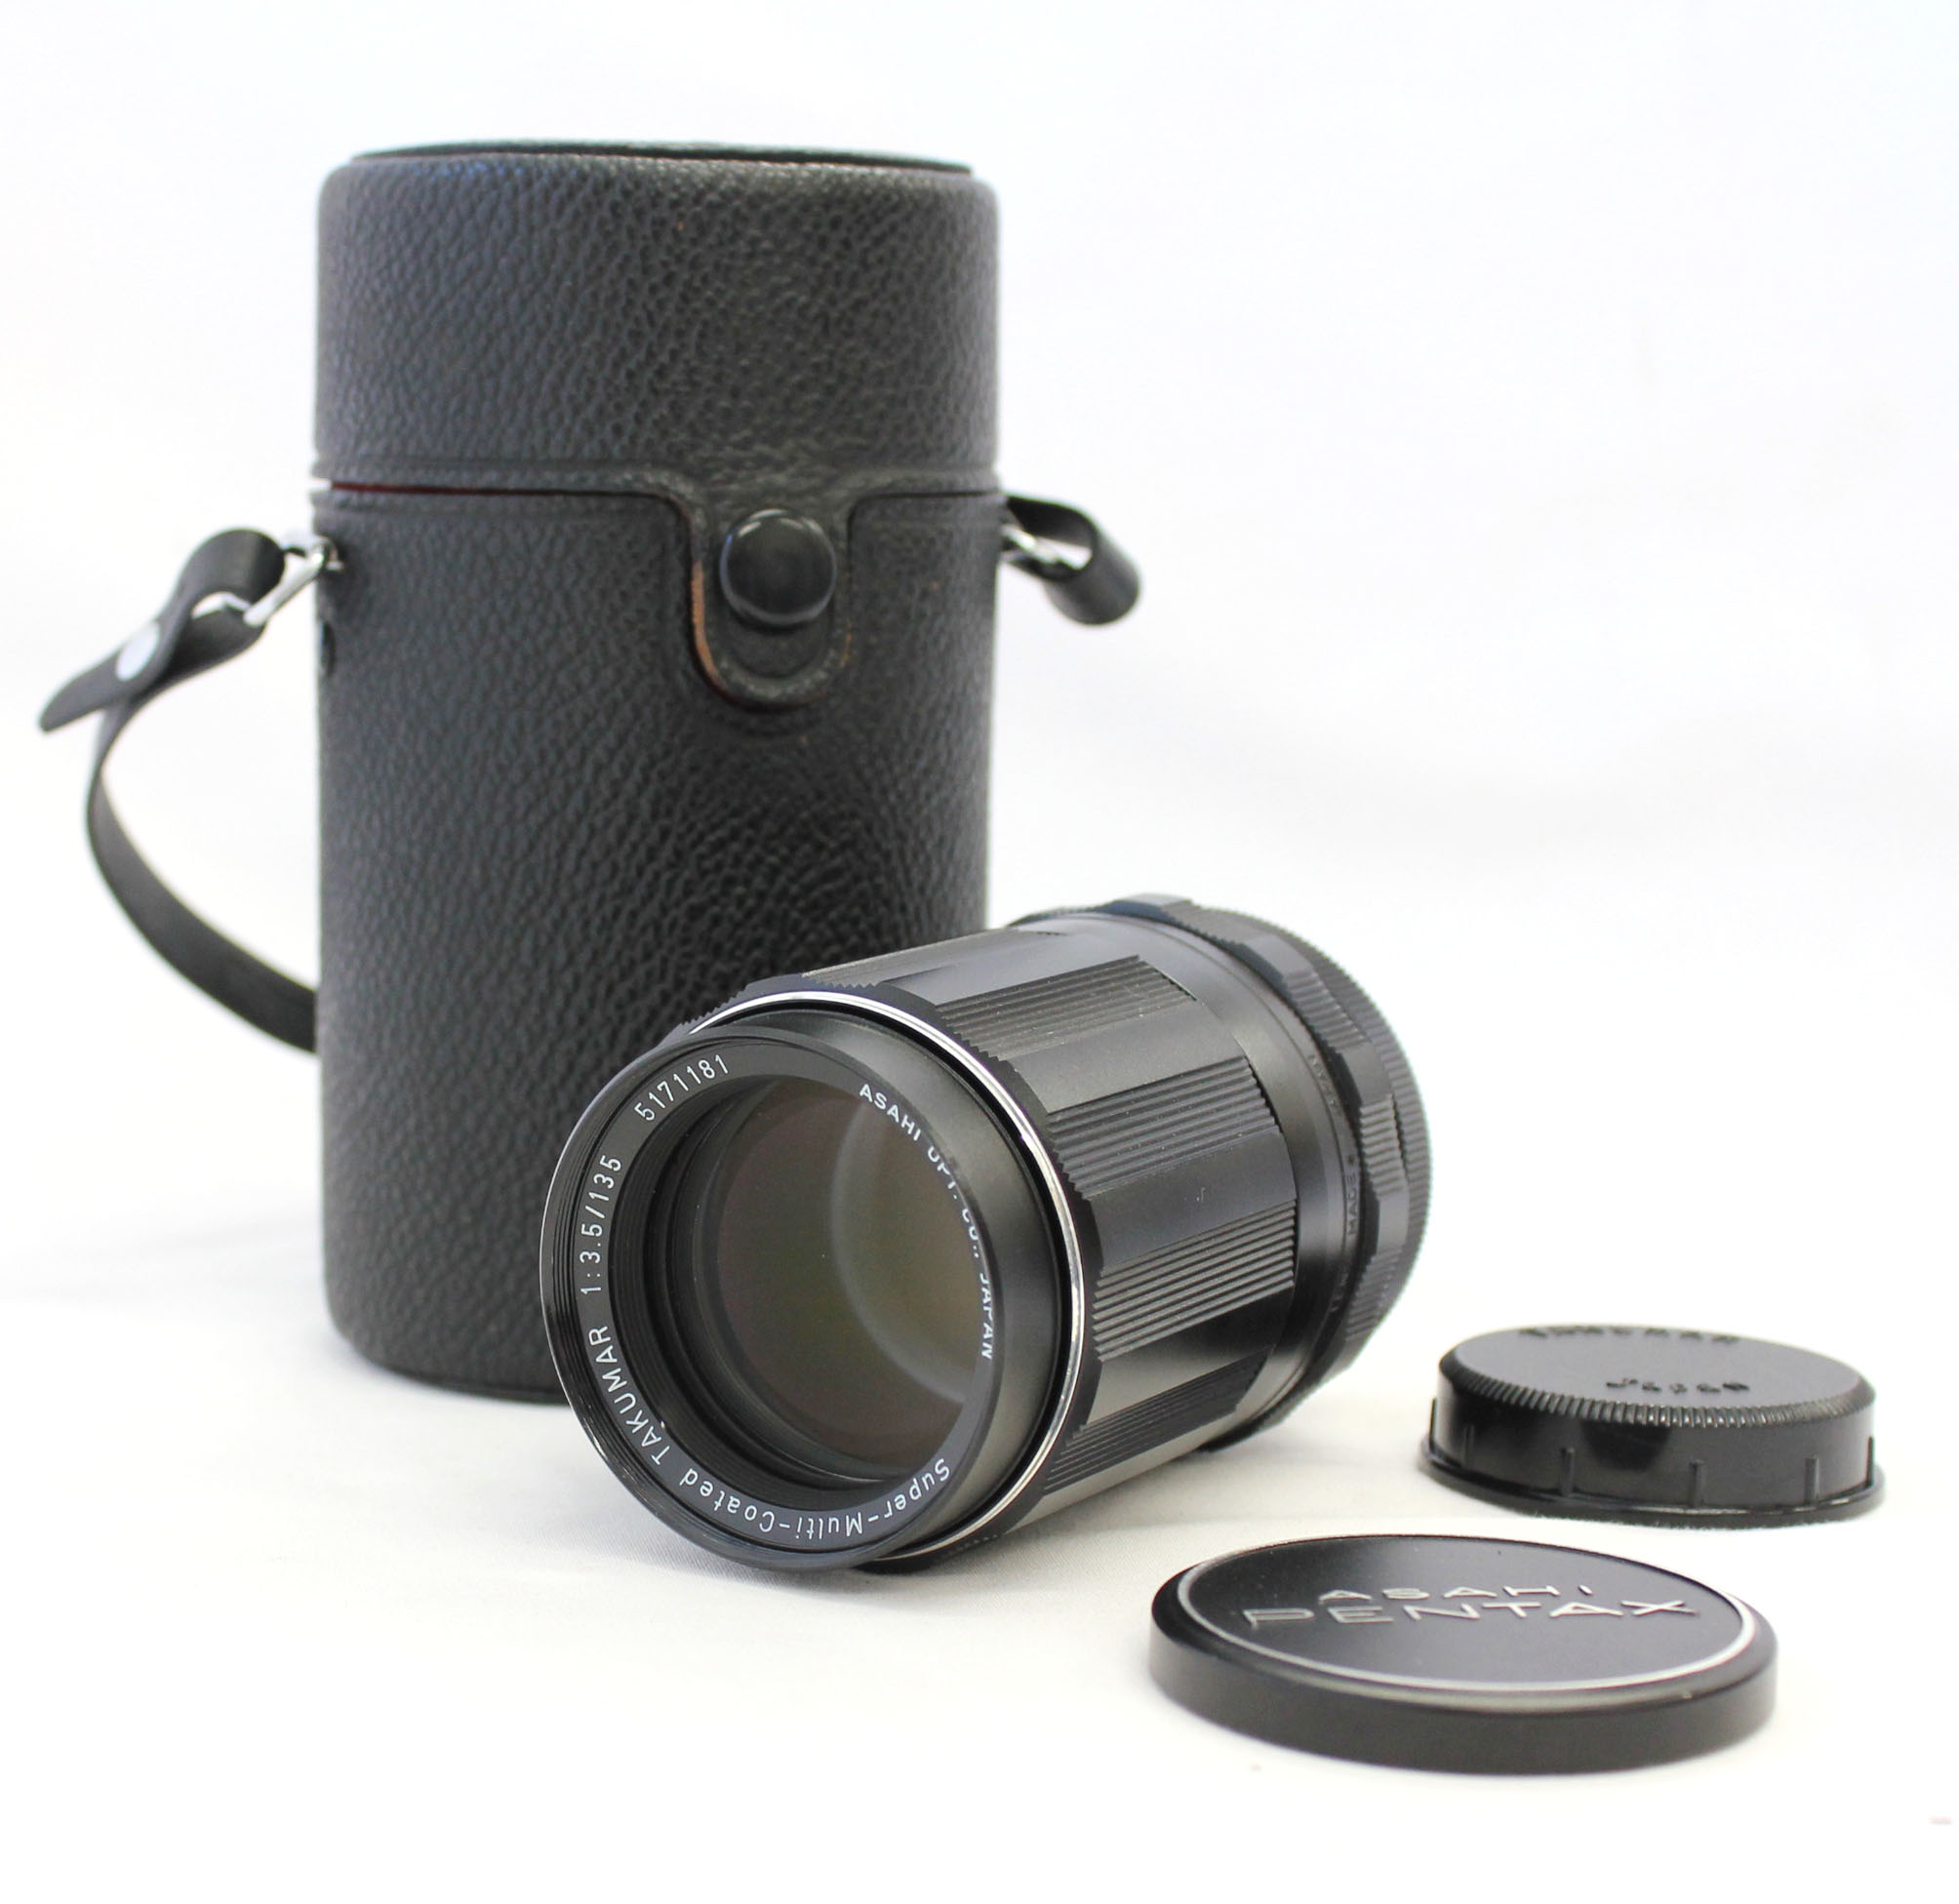 [Near Mint] Asahi Pentax Super-Multi-Coated Takumar 135mm F/3.5 M42 Lens with Case from Japan